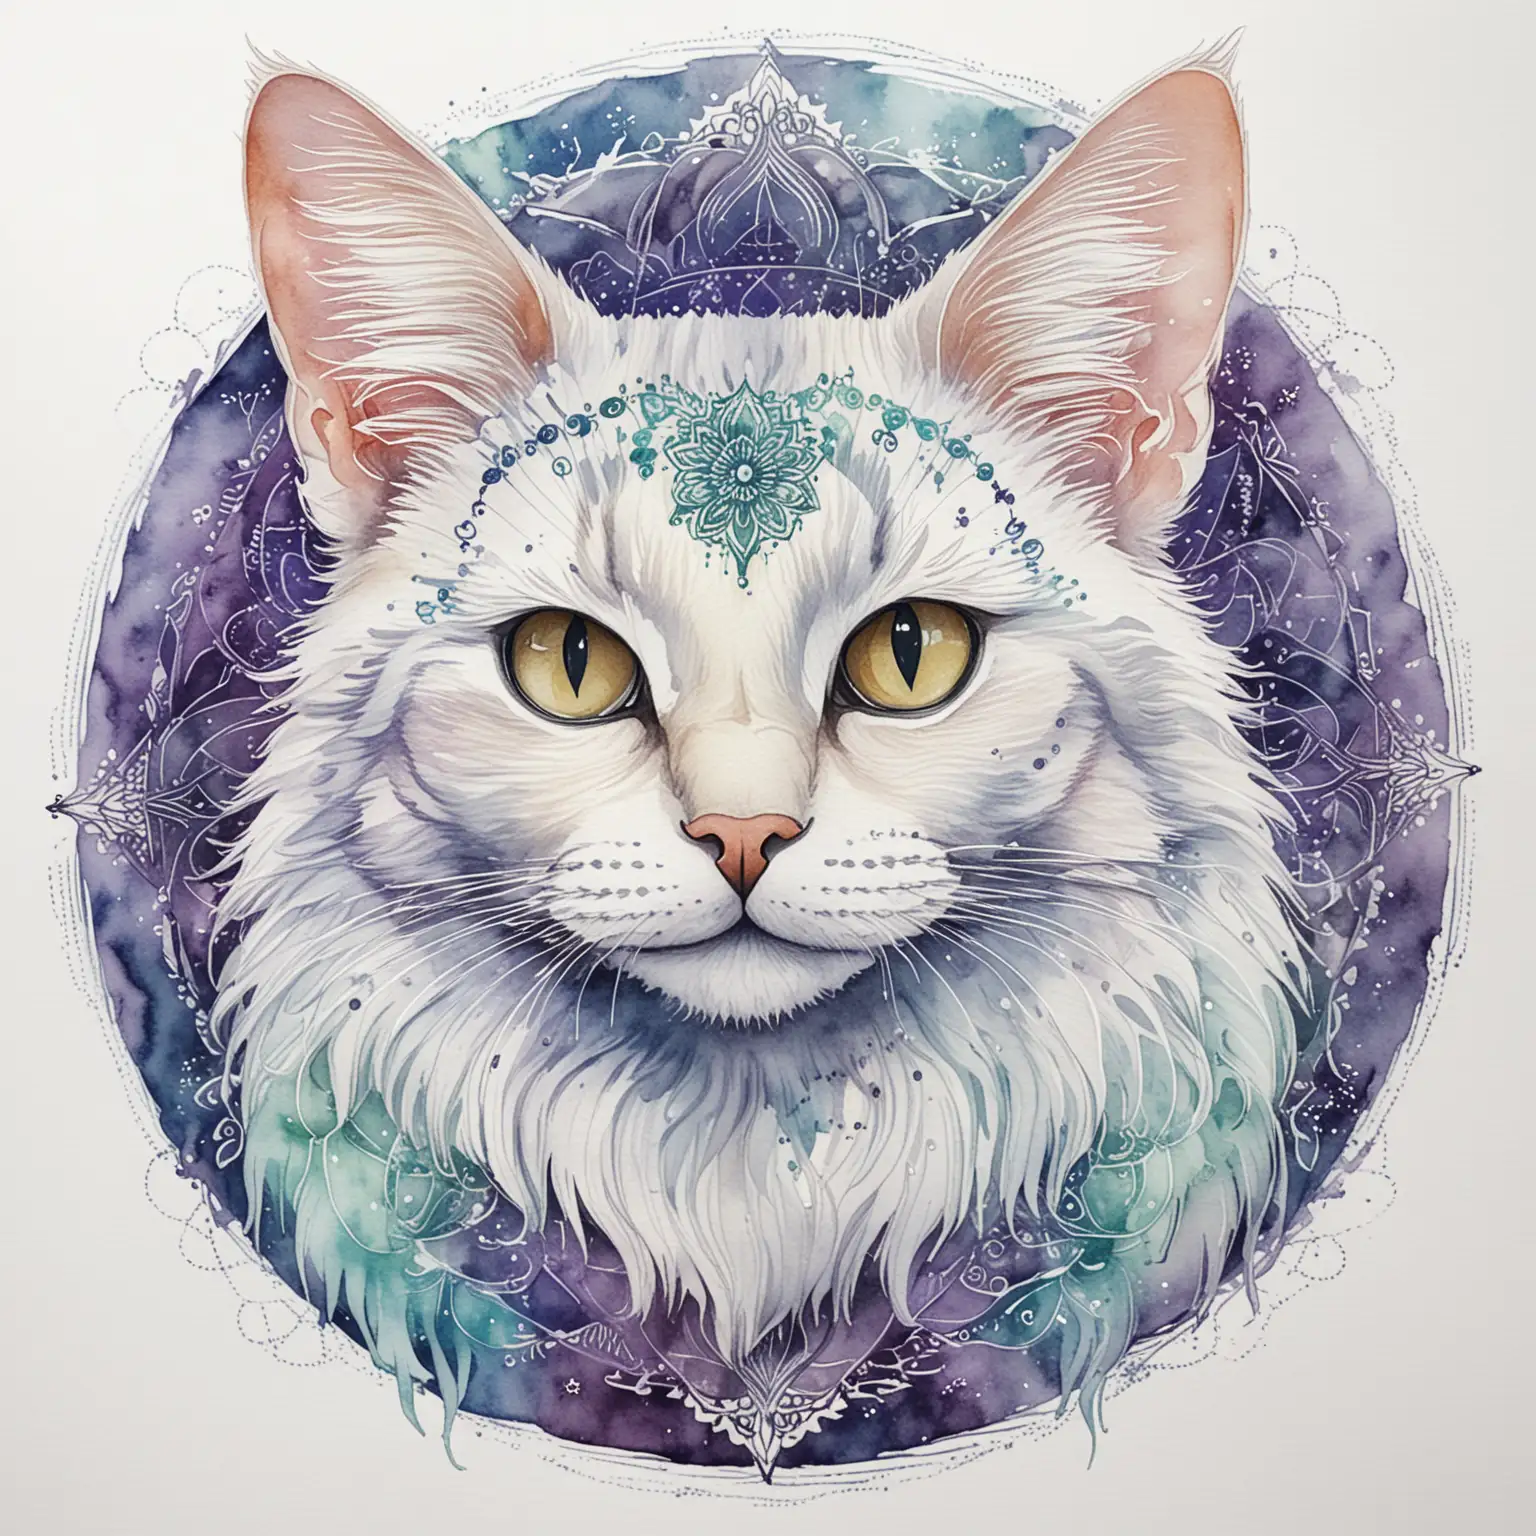 Majestic Watercolor Cat with Intricate Mandala Design